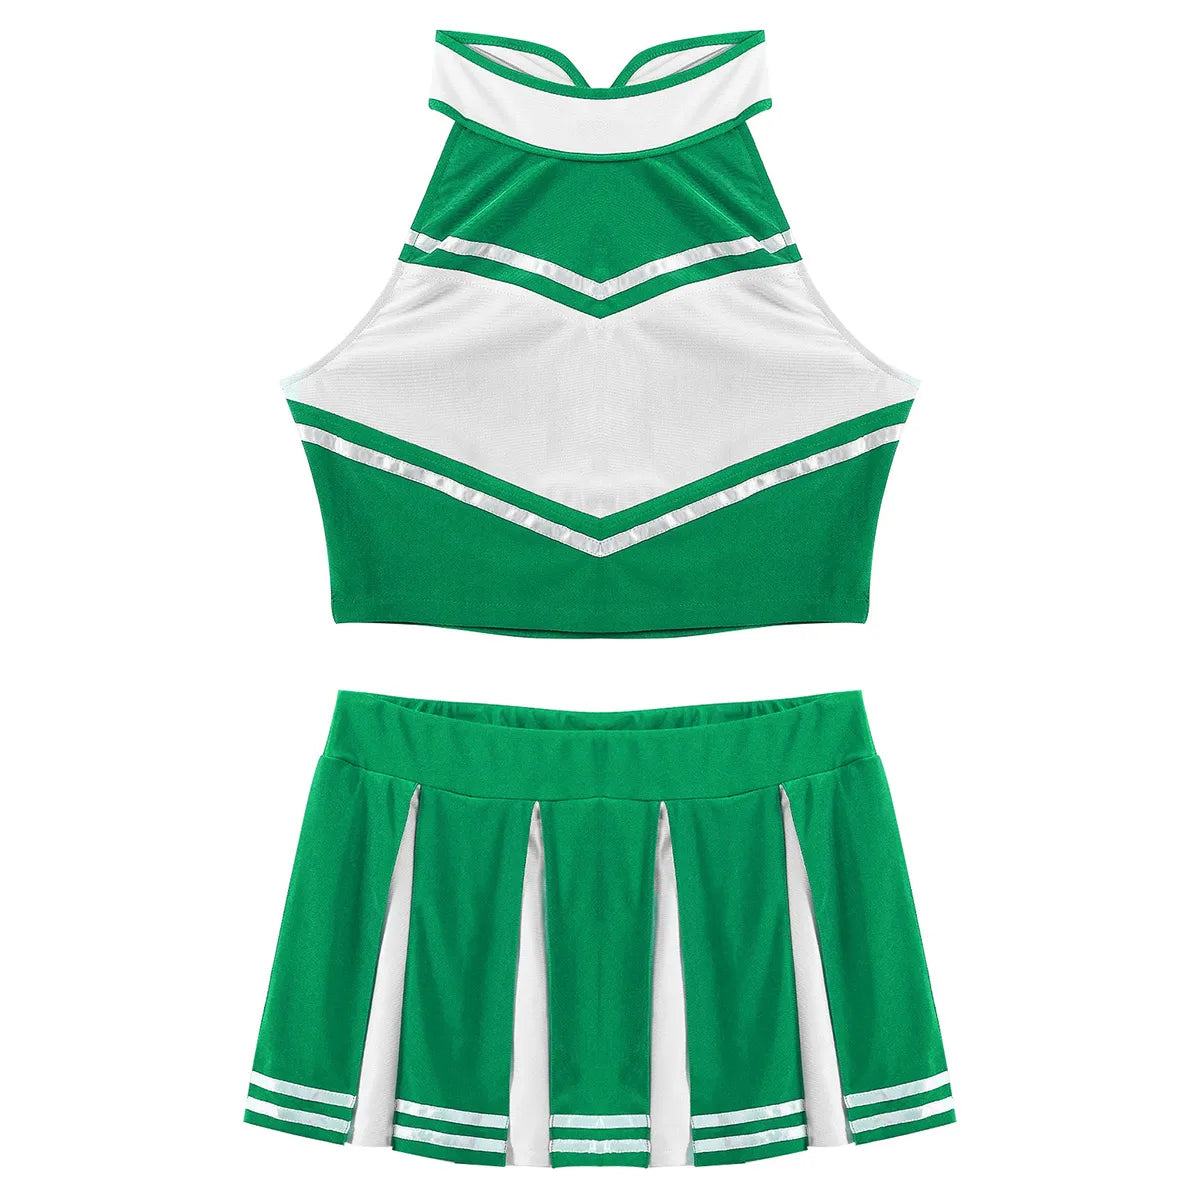 Womens Femme Charming Cheerleader Costume Uniform Sexy Clubwear Crop Top with Mini Pleated Skirt Lingerie Gleeing School Girls